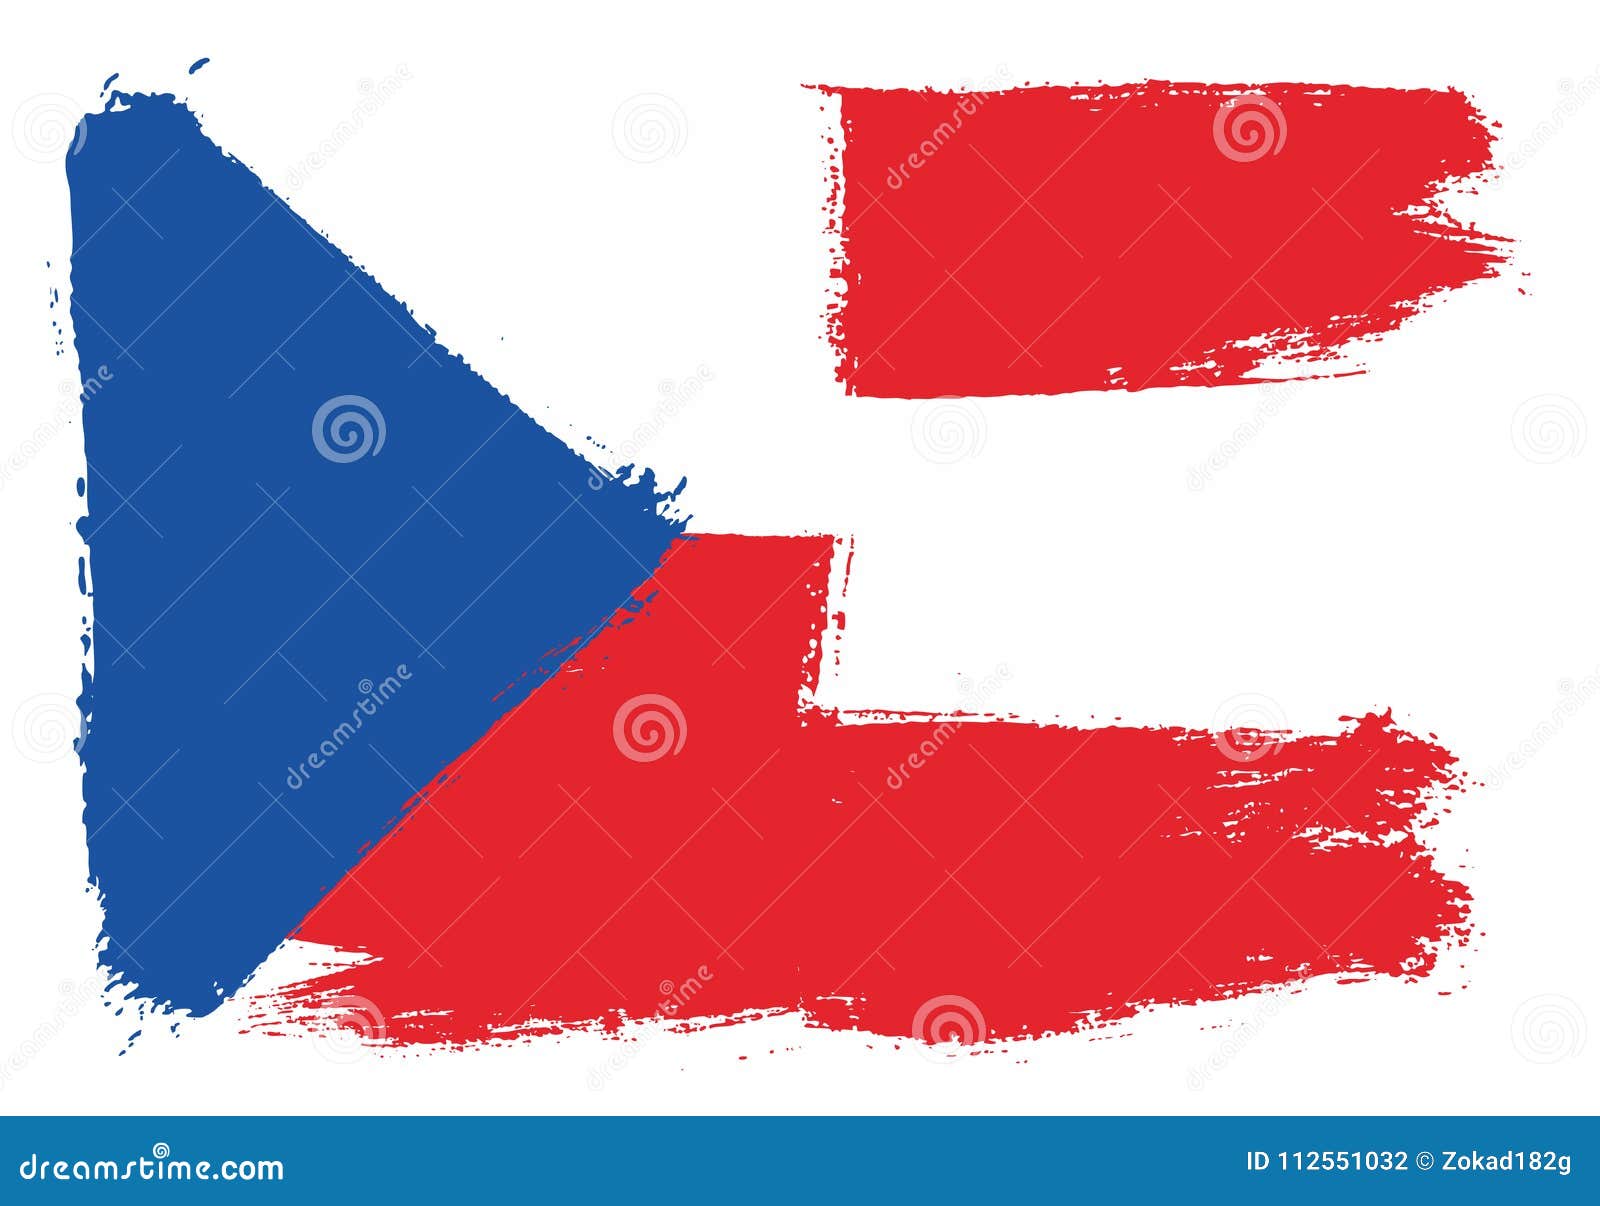 Czech Republic Flag And Austria Flag Vector Hand Painted